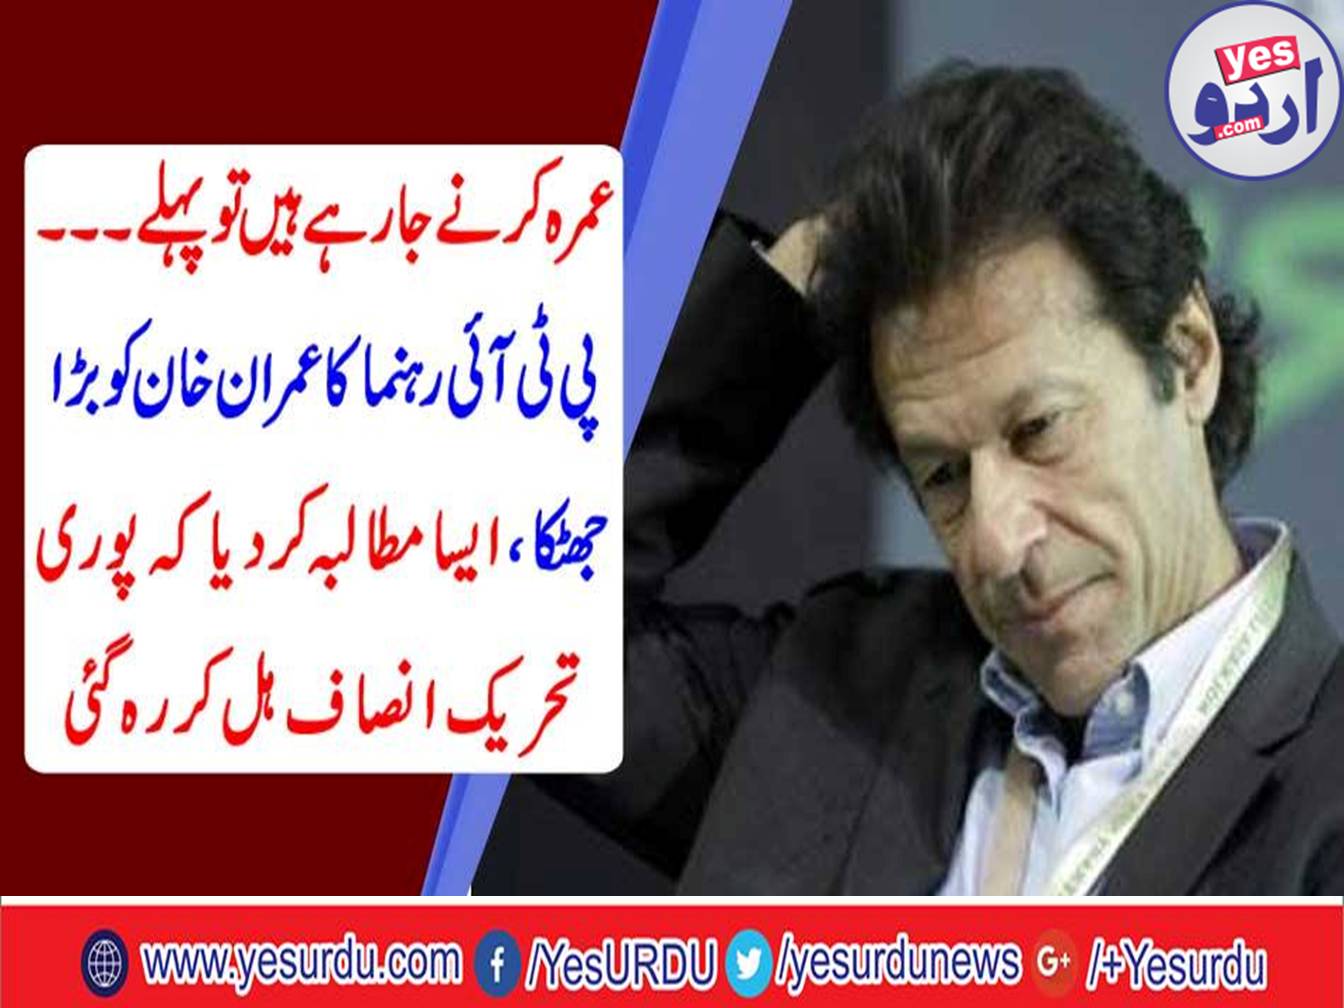 Big shock to PTI leader Imran Khan